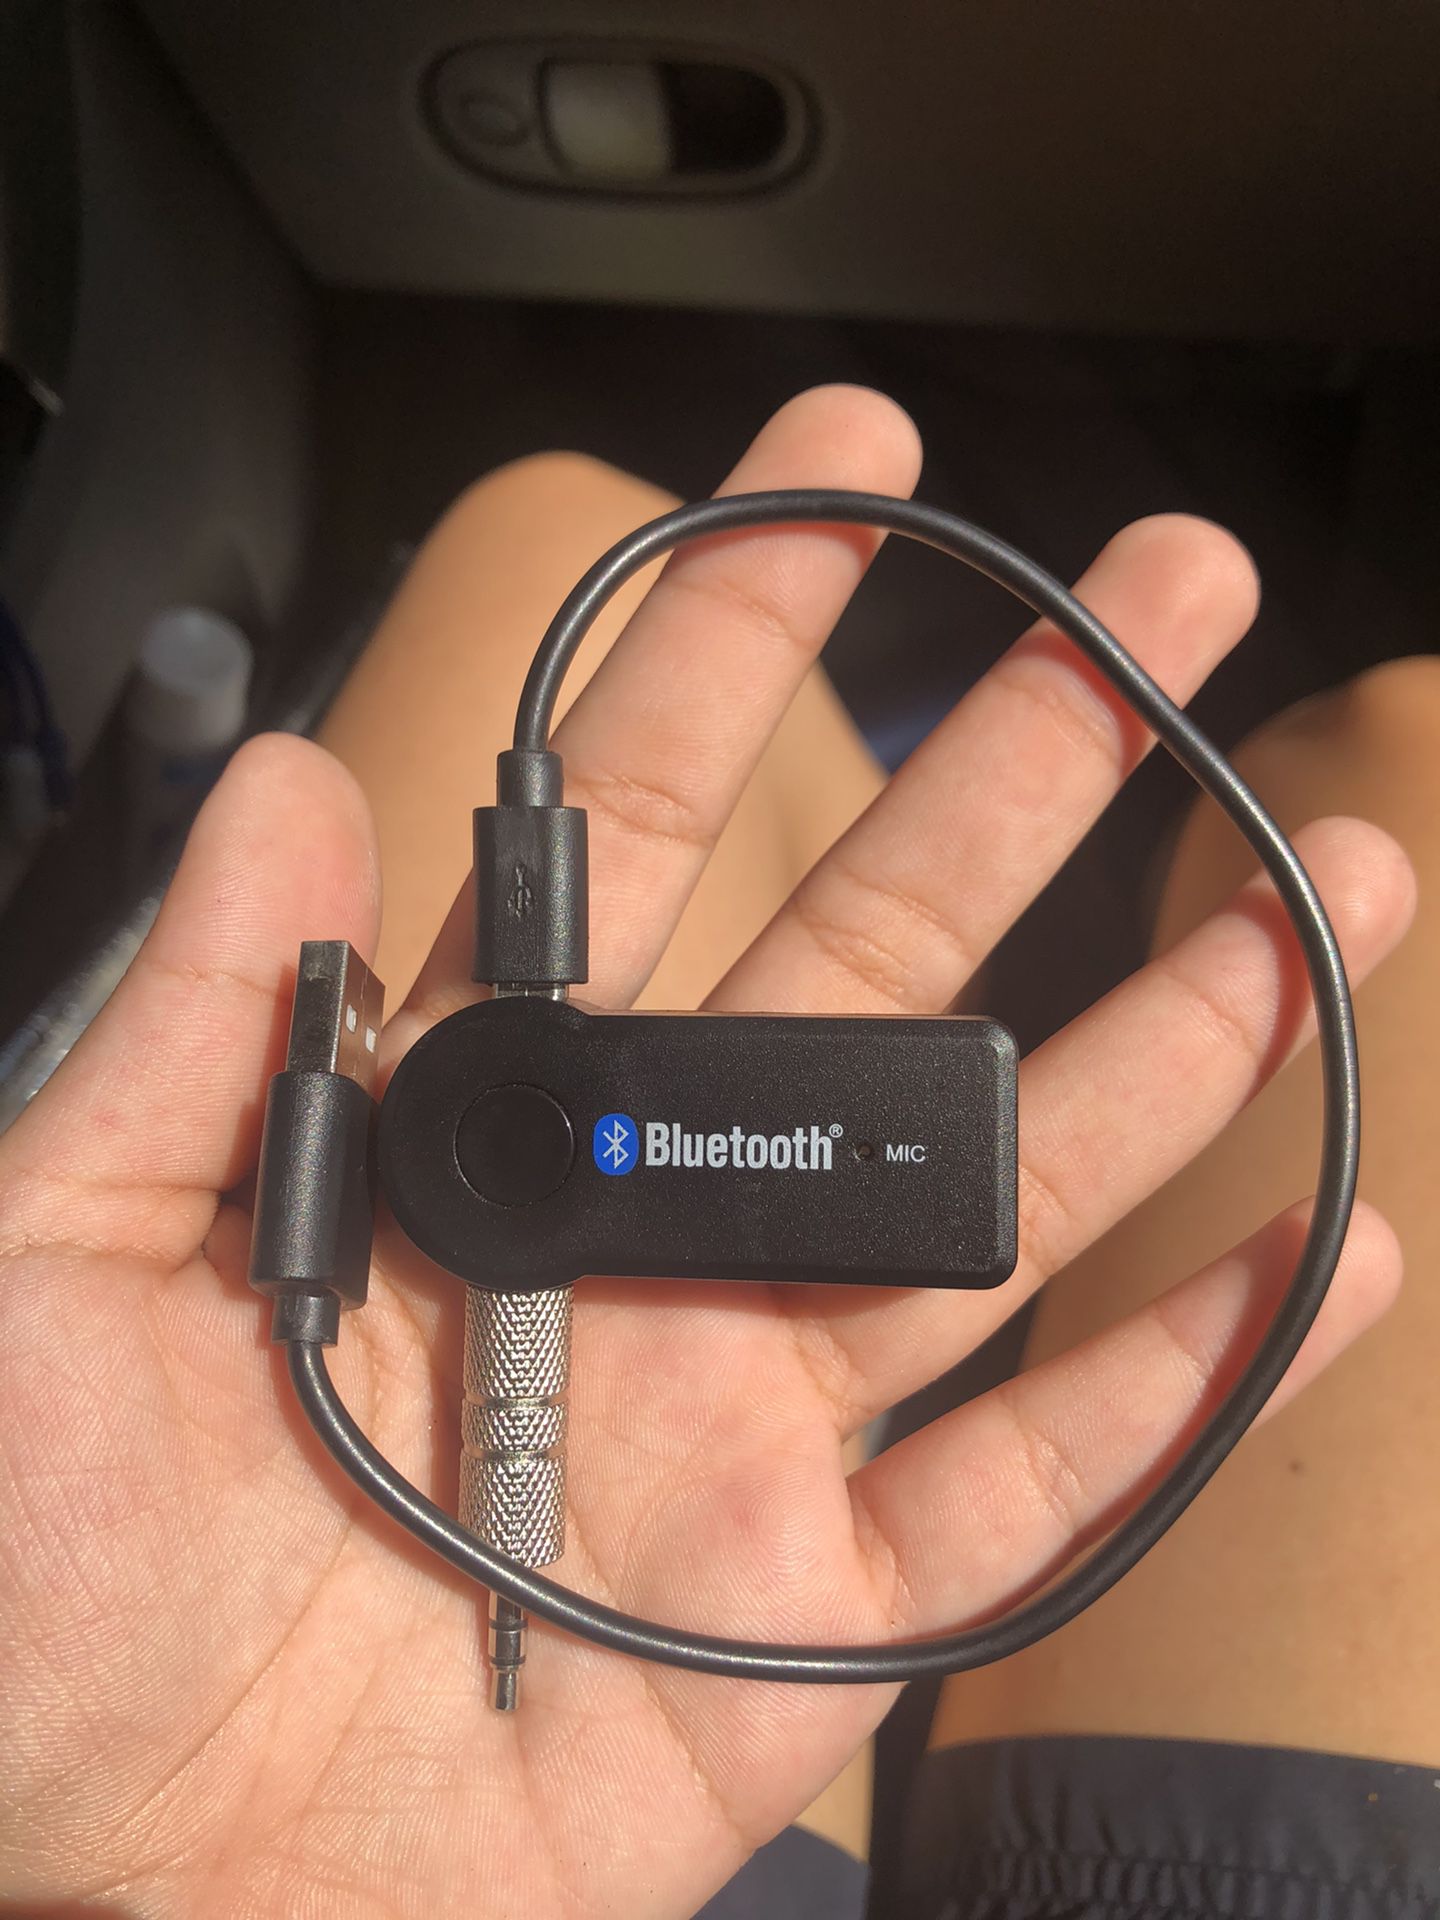 Bluetooth audio car kit